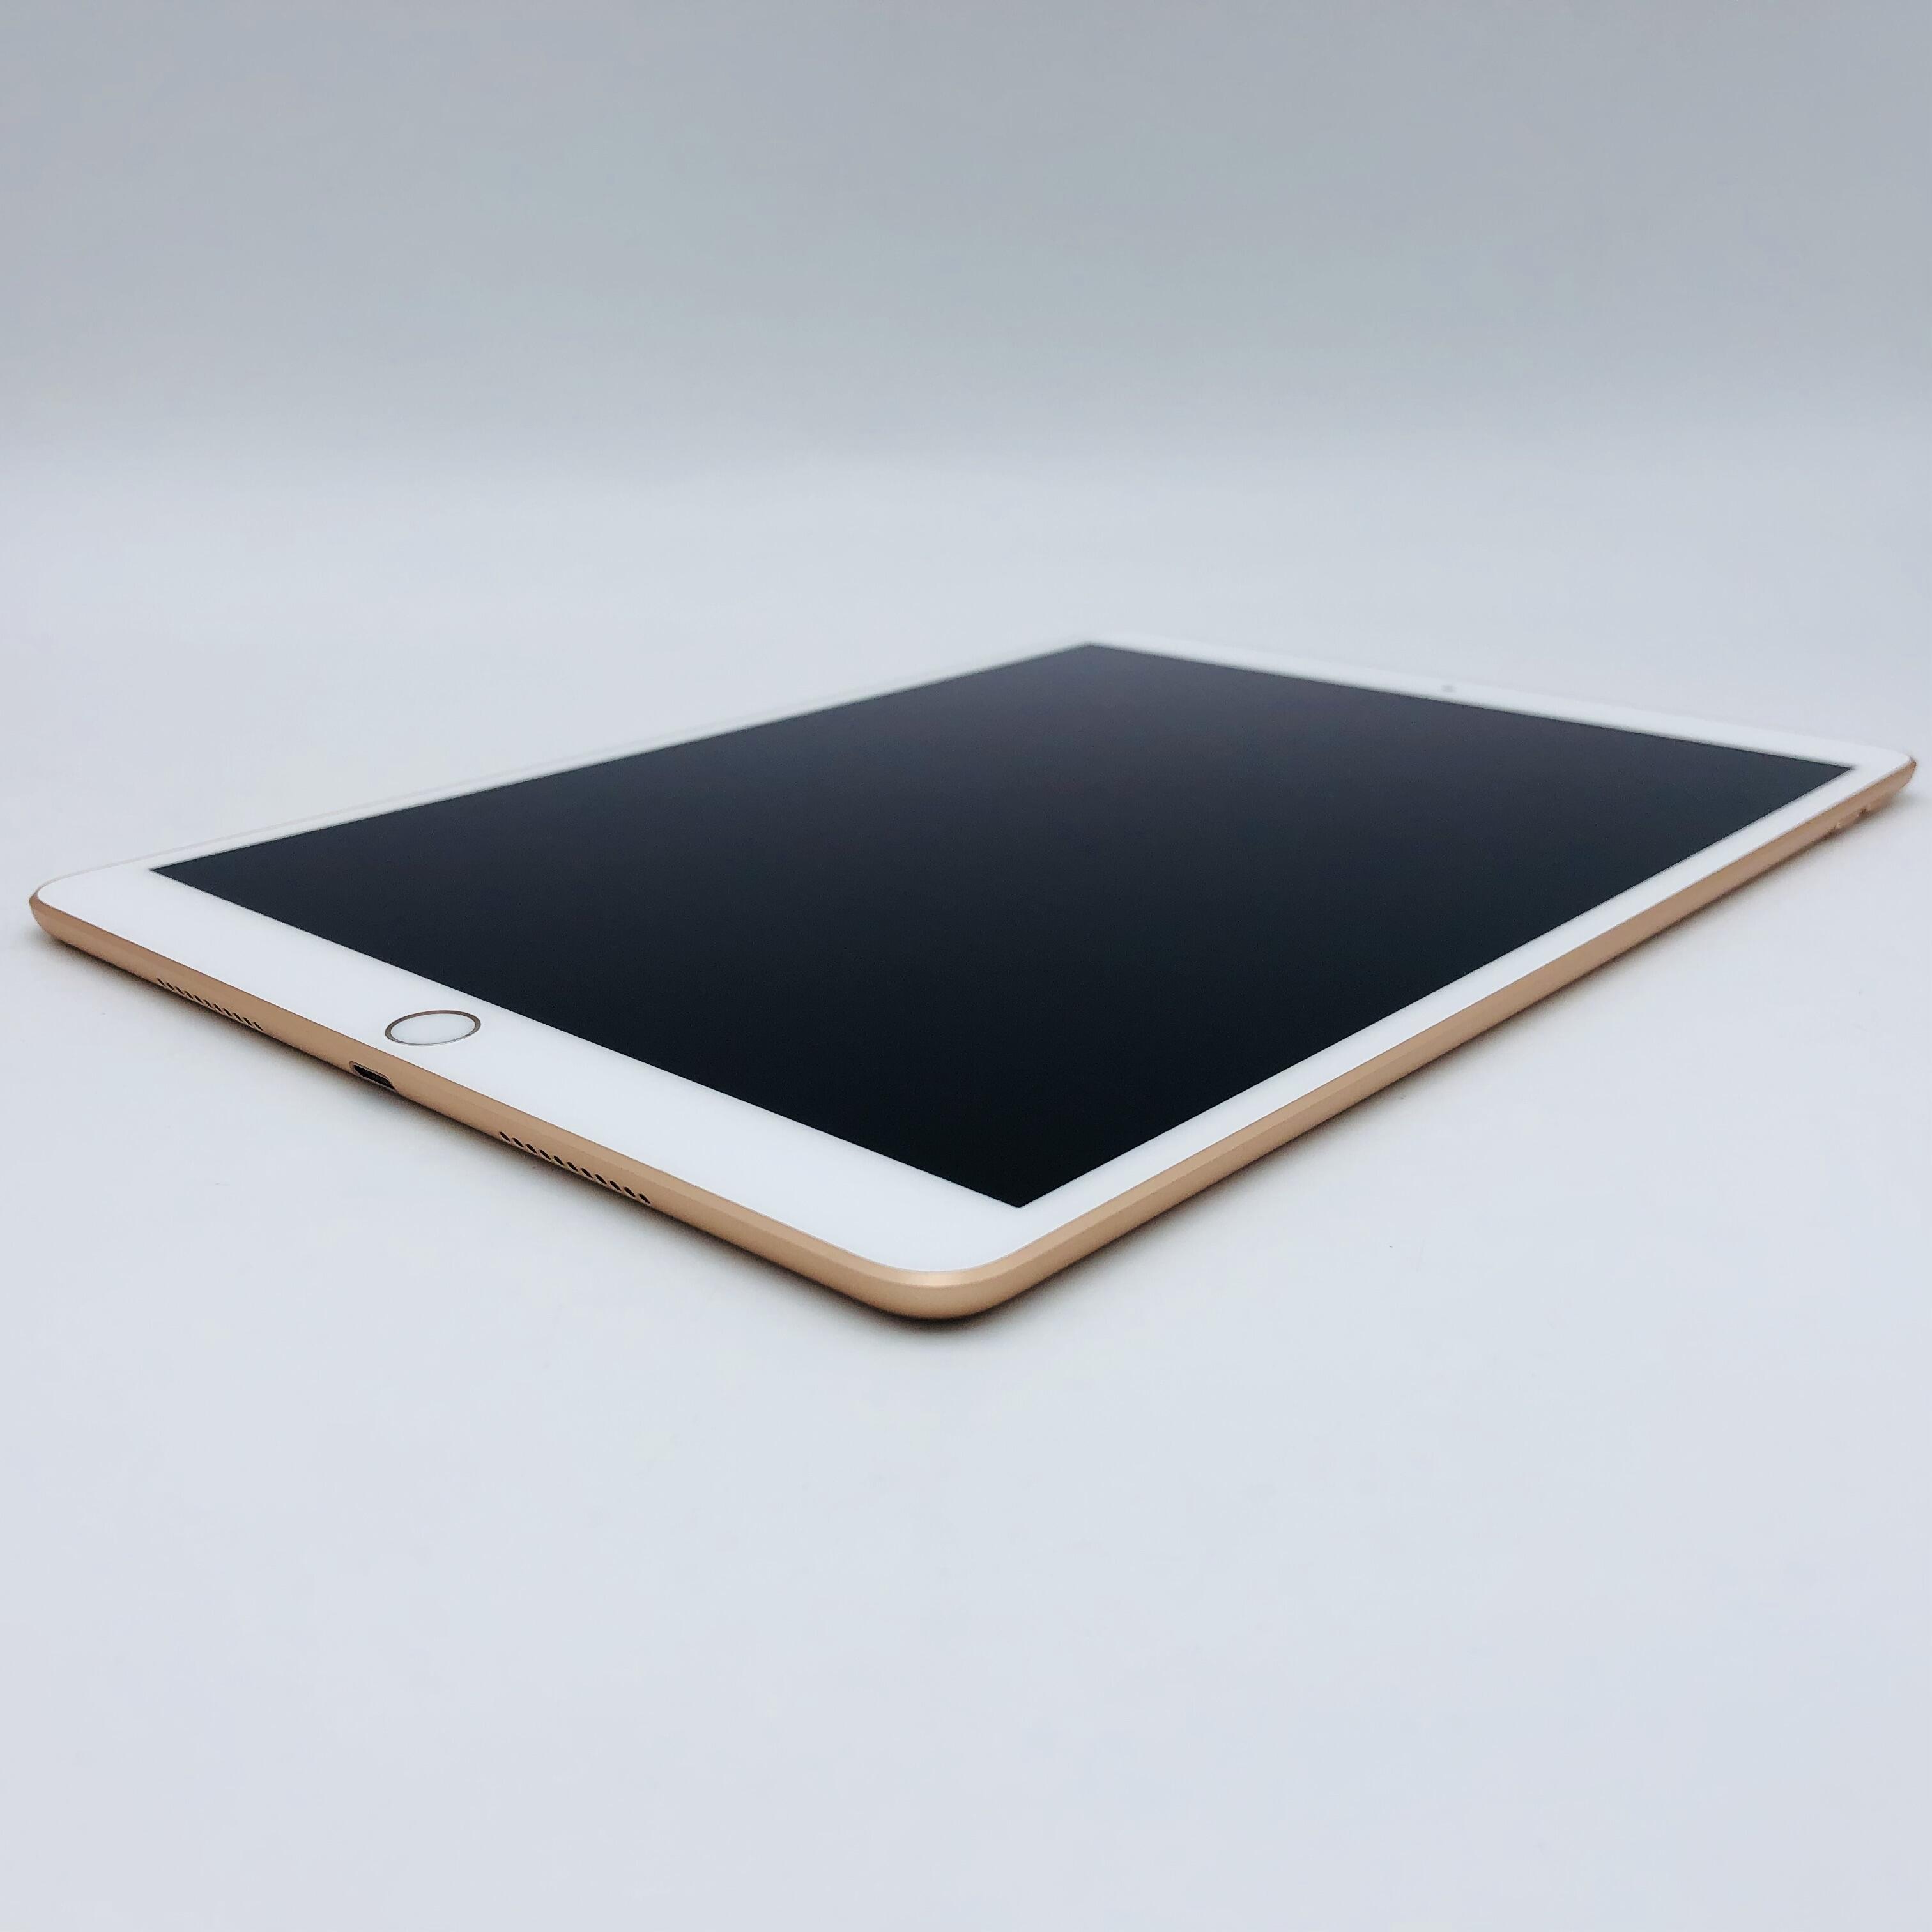 iPad Air 3 64G 国行WIFI版 官换新机